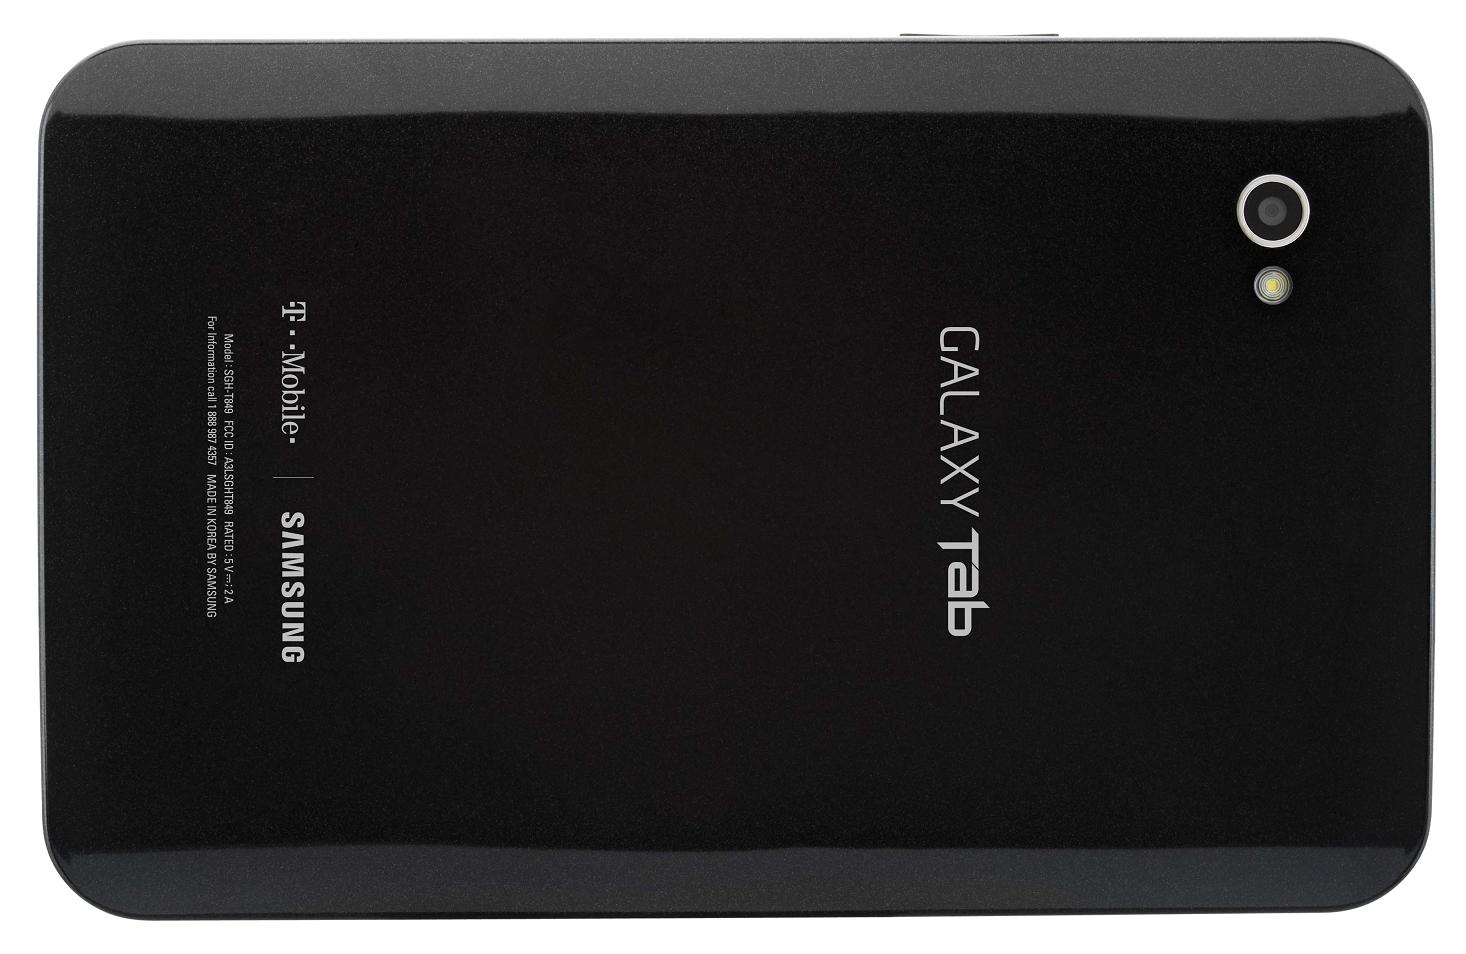 Samsung Galaxy Tab T-Mobile 7-0 (USA: SGH-T849) | SysPhones